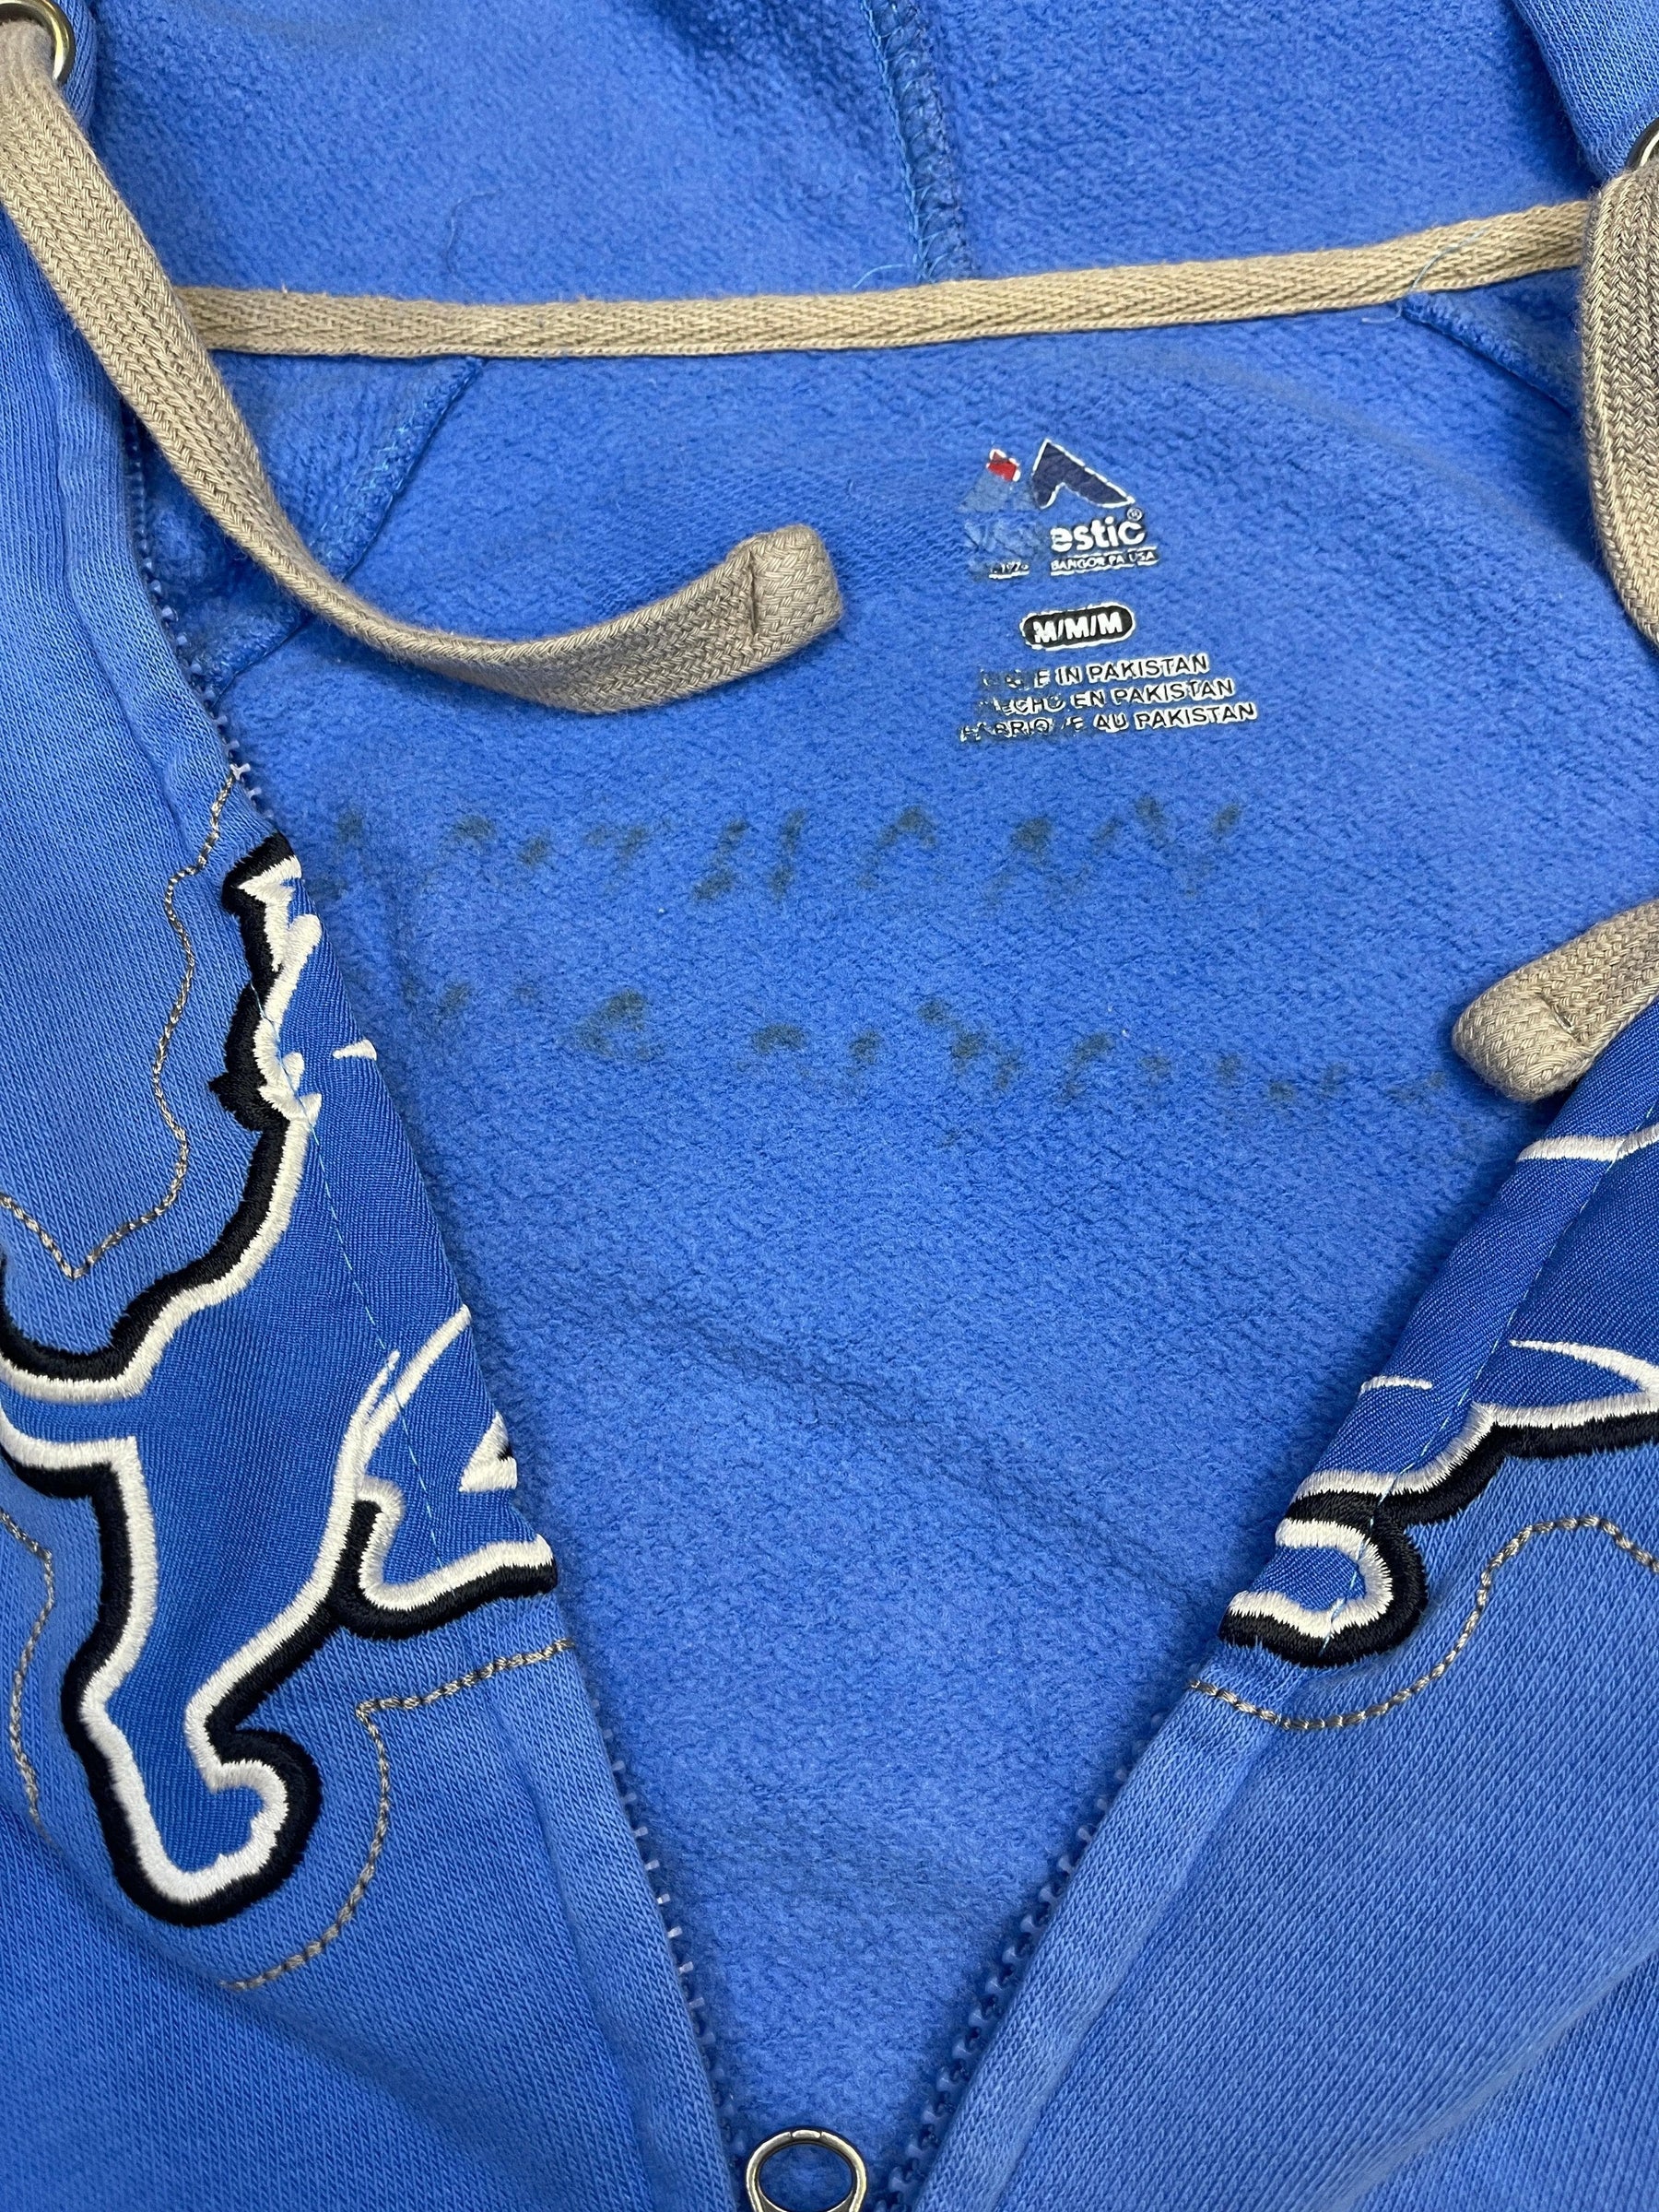 NFL Detroit Lions Majestic Old School Stitched Full Zip Hoodie Jacket Women's Medium